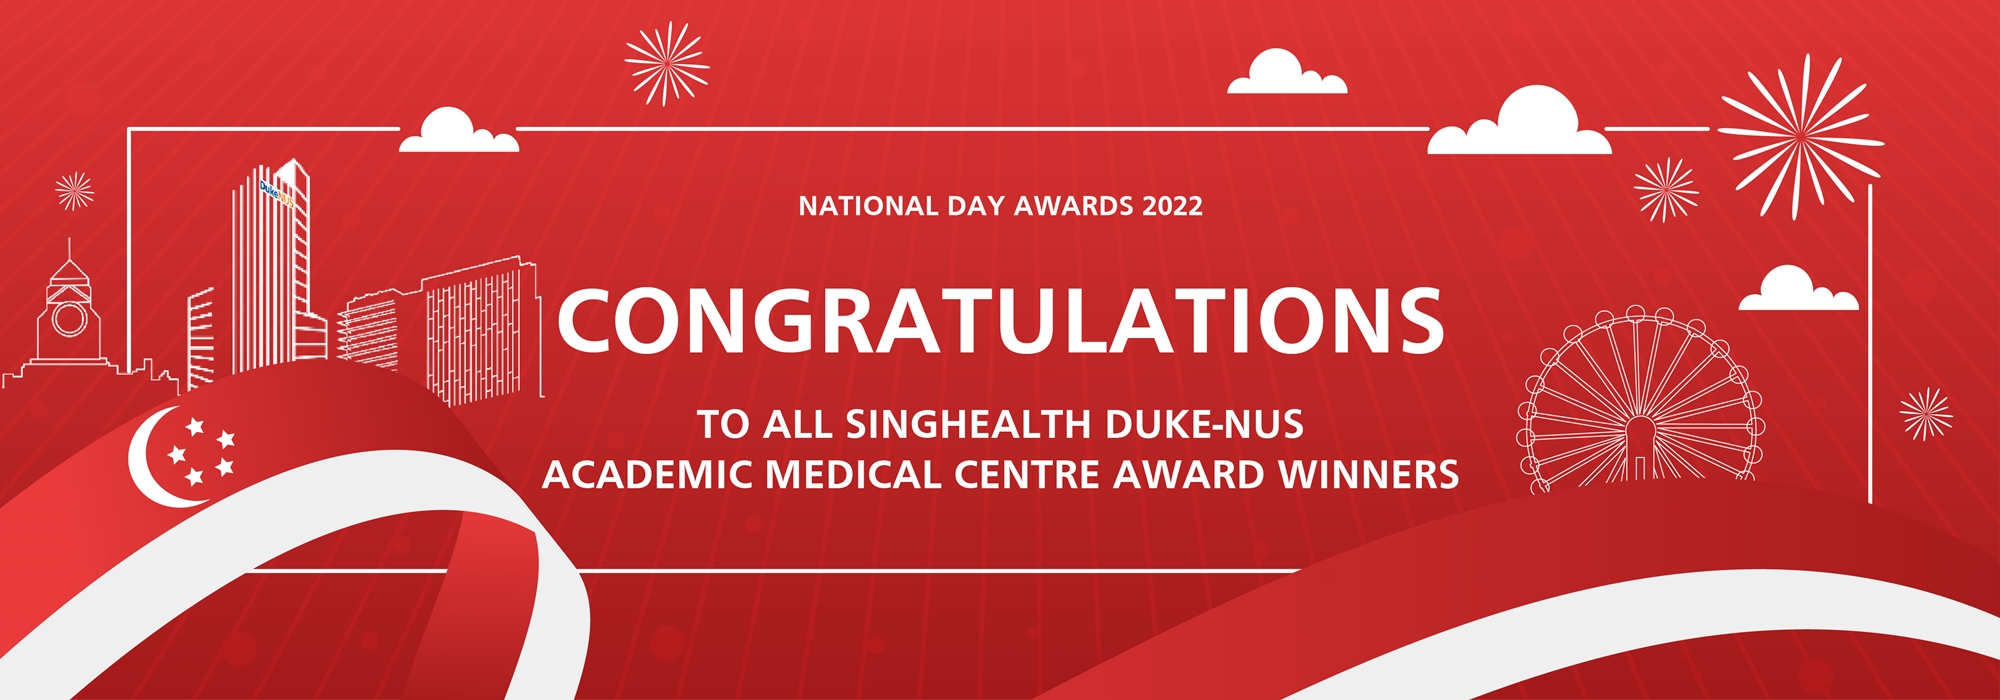 Congratulations to all SingHealth Duke-NUS award winners!